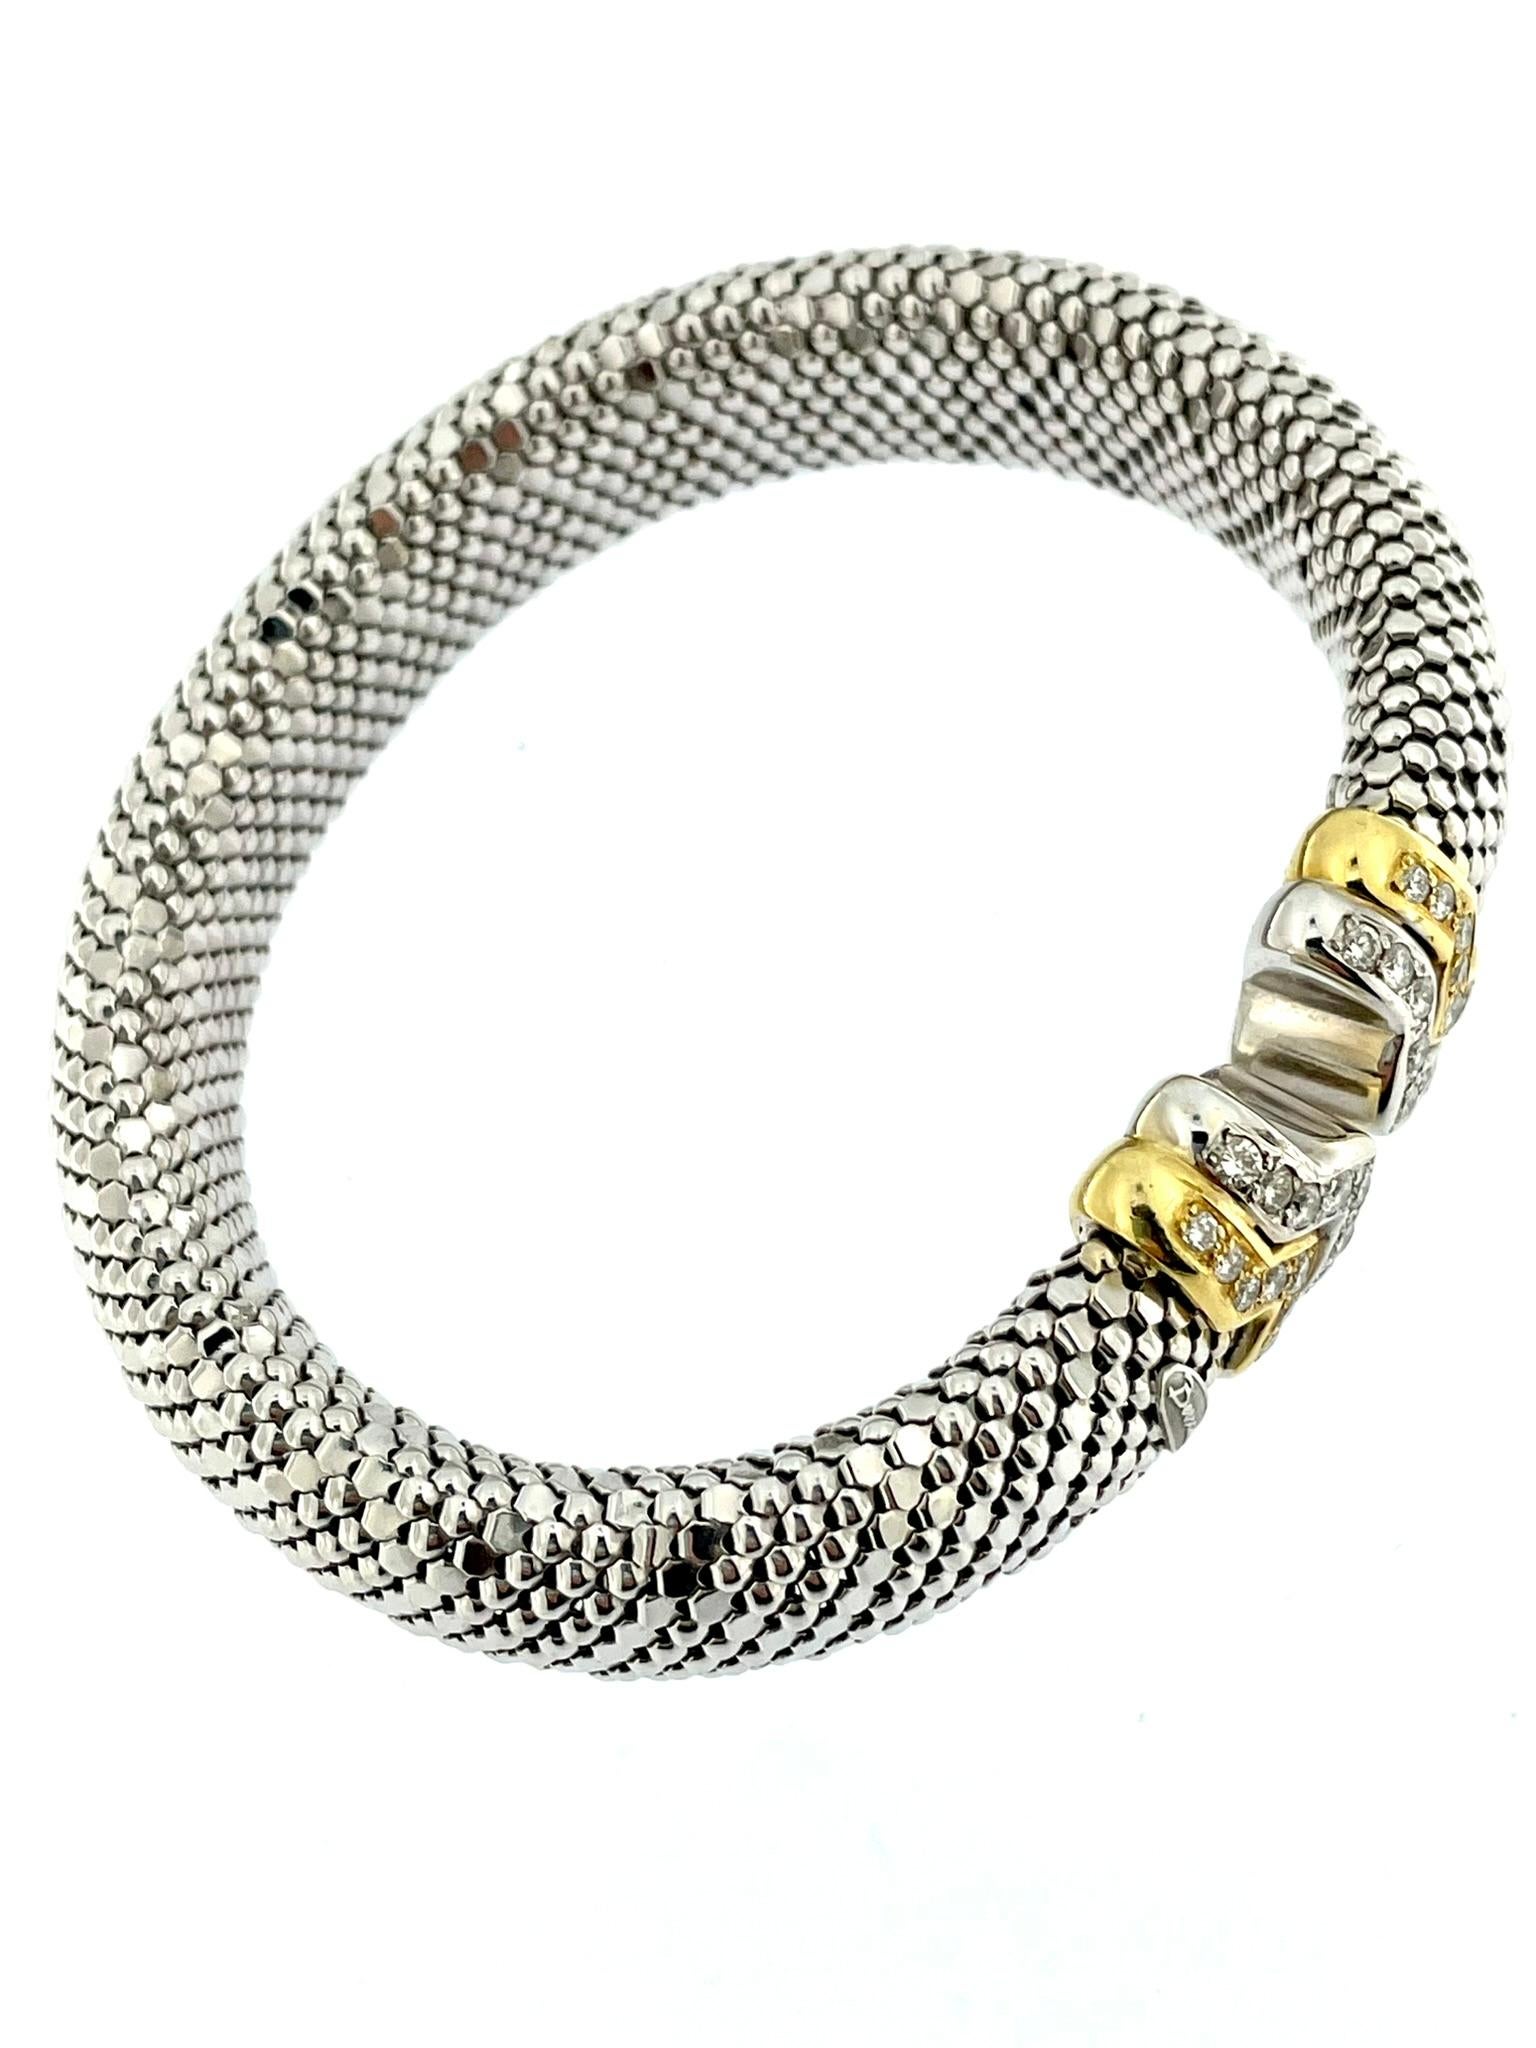 Modern Fashion Italian “Bersani” 18kt Gold Flexible Clamper Bracelet with Diamonds  For Sale